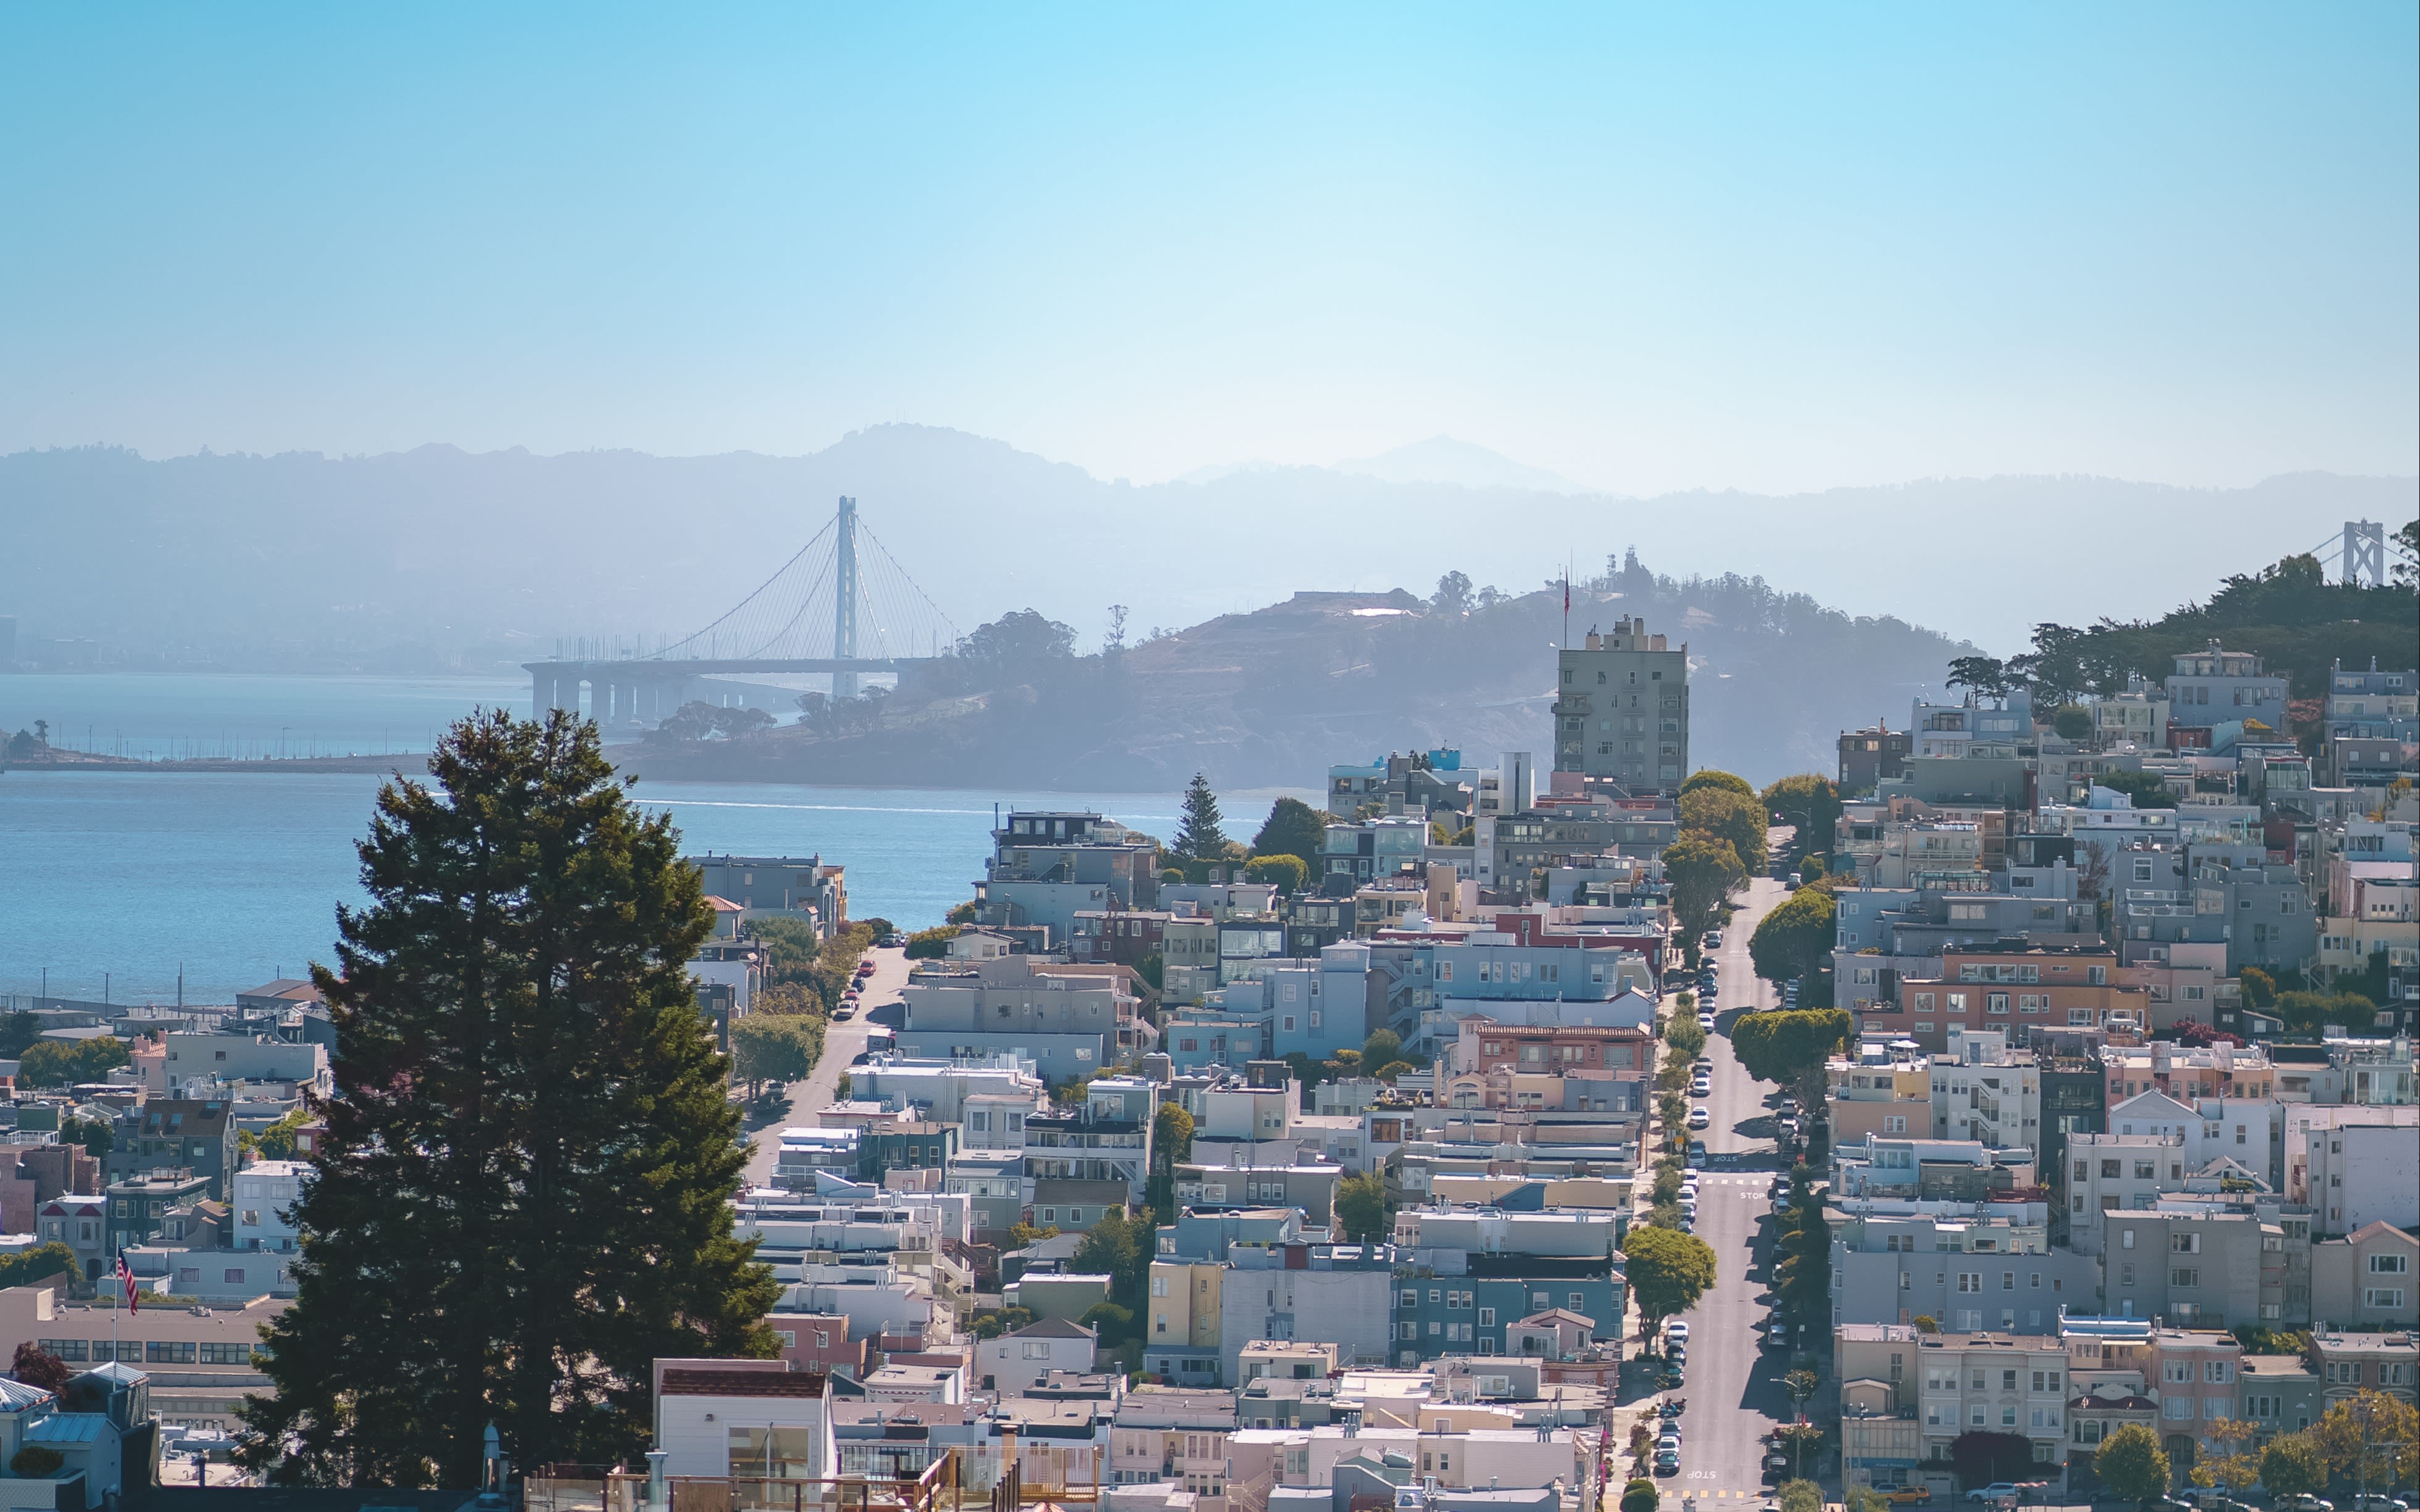 San Francisco's skyline